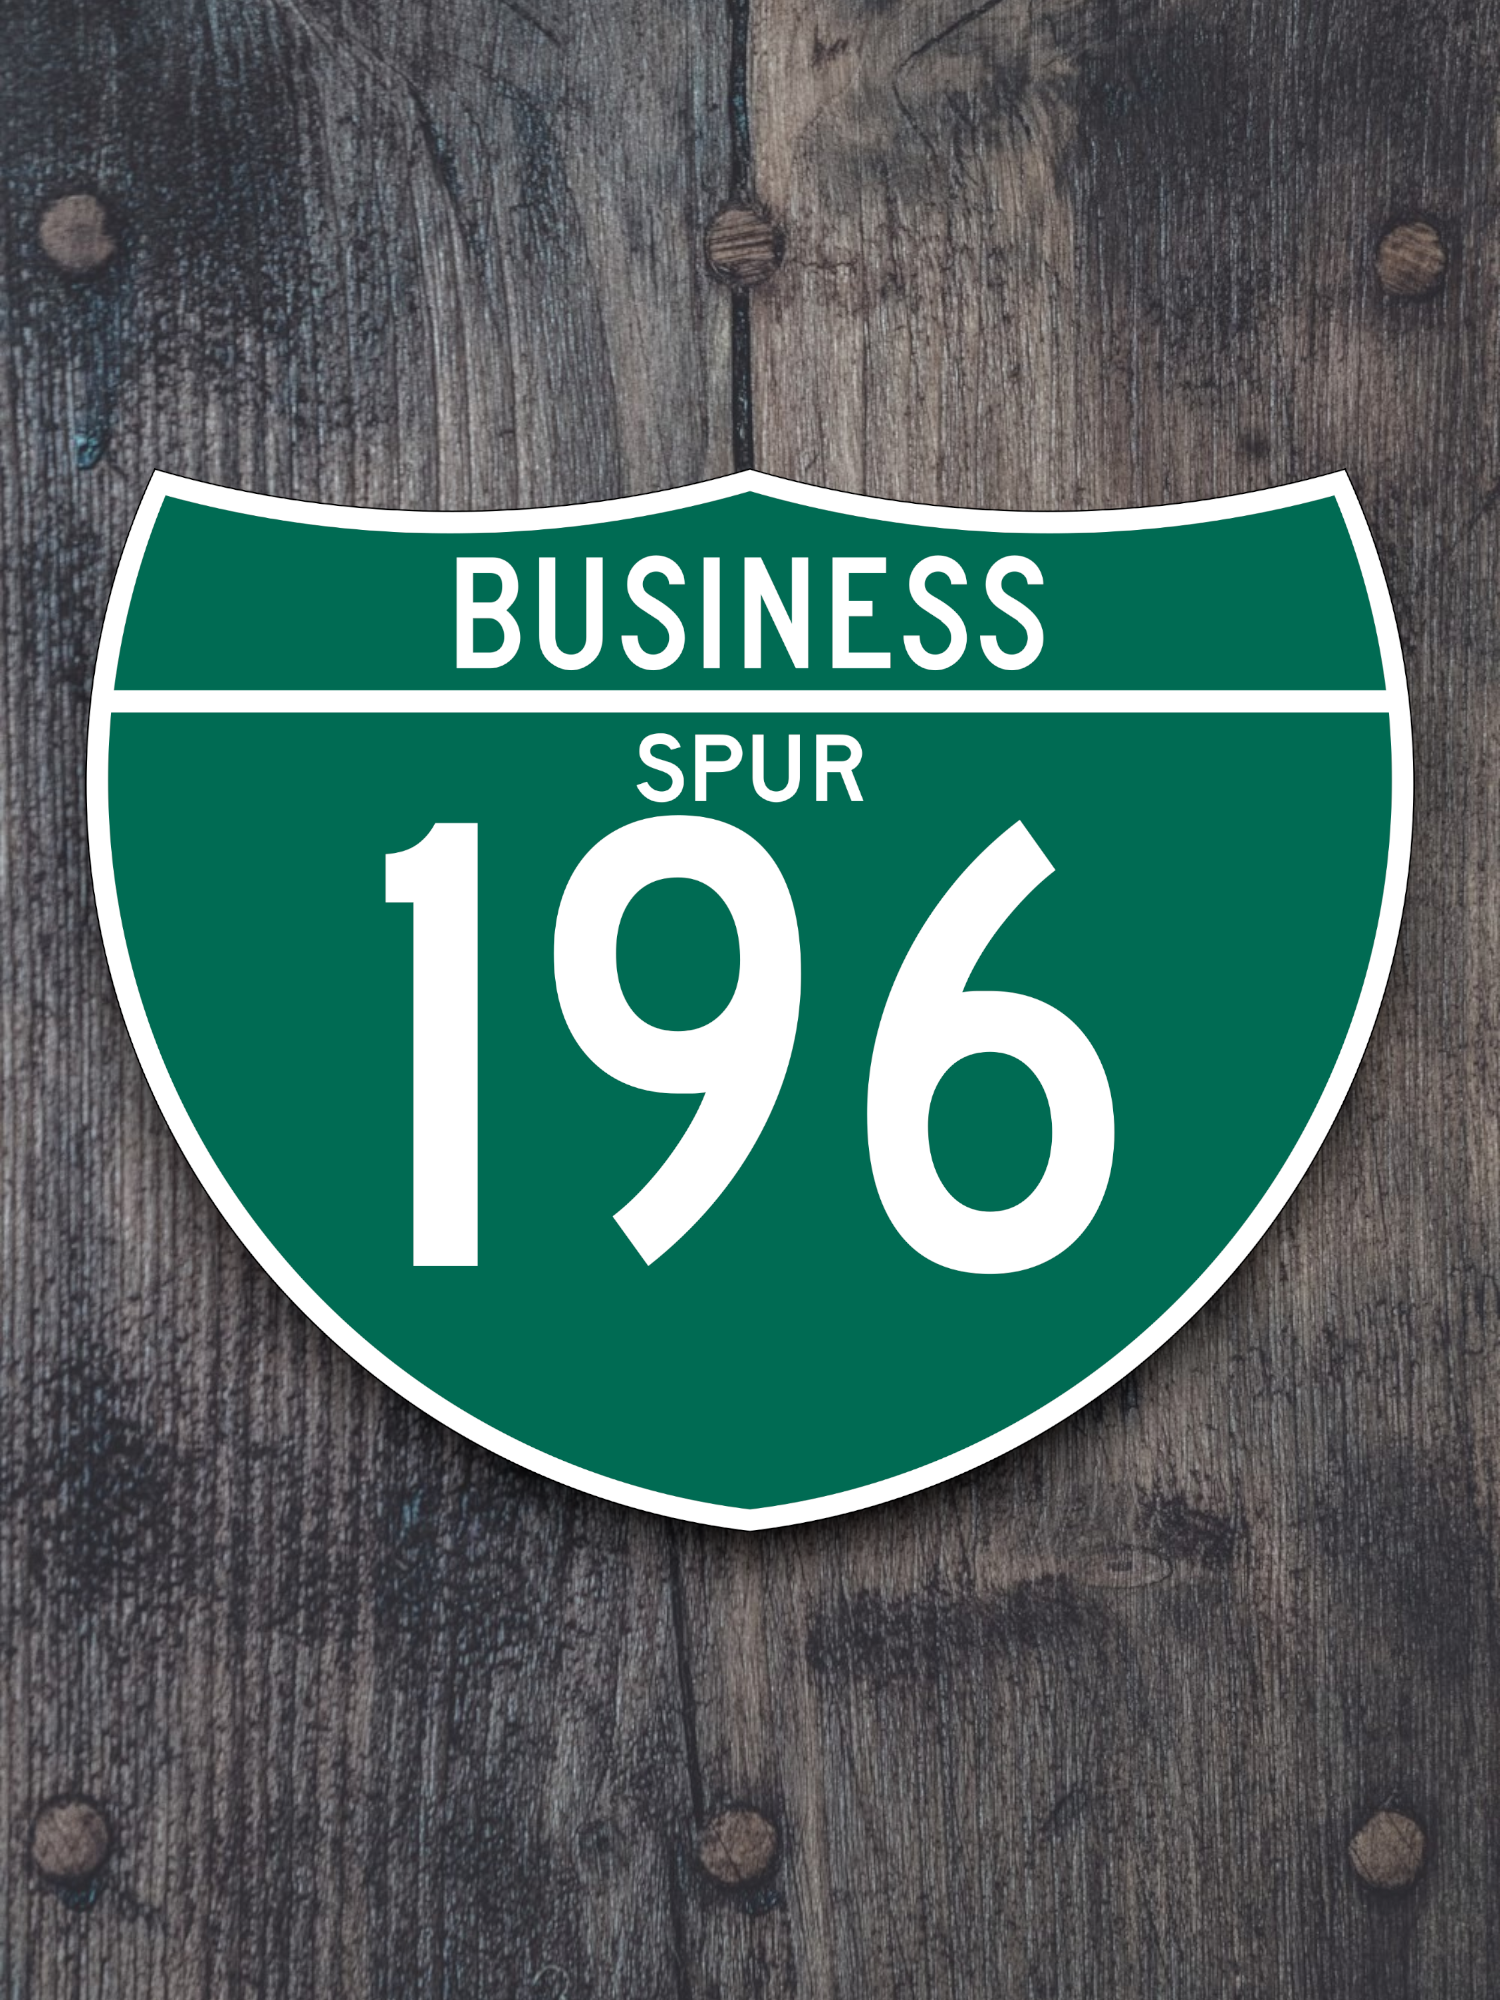 Business Spur 196 Road Sign Sticker